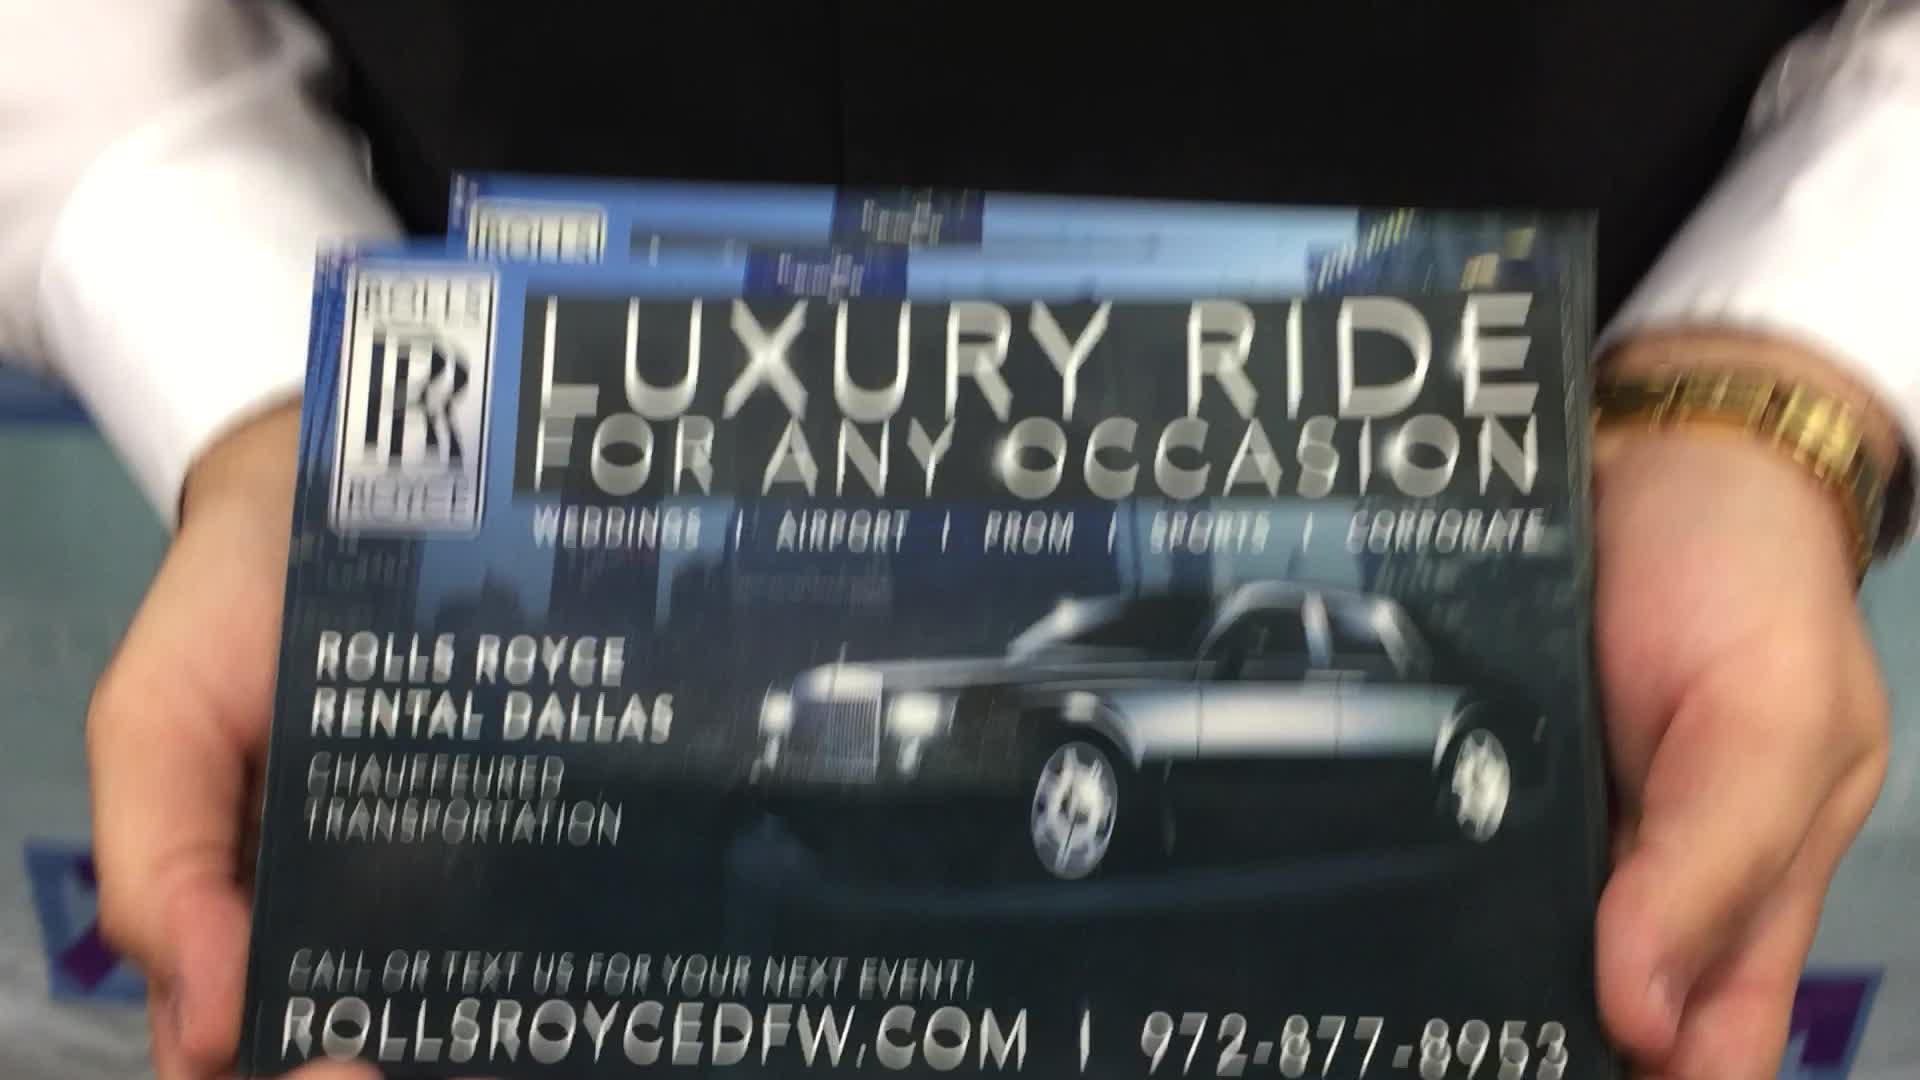 Rolls Royce limousine servi...